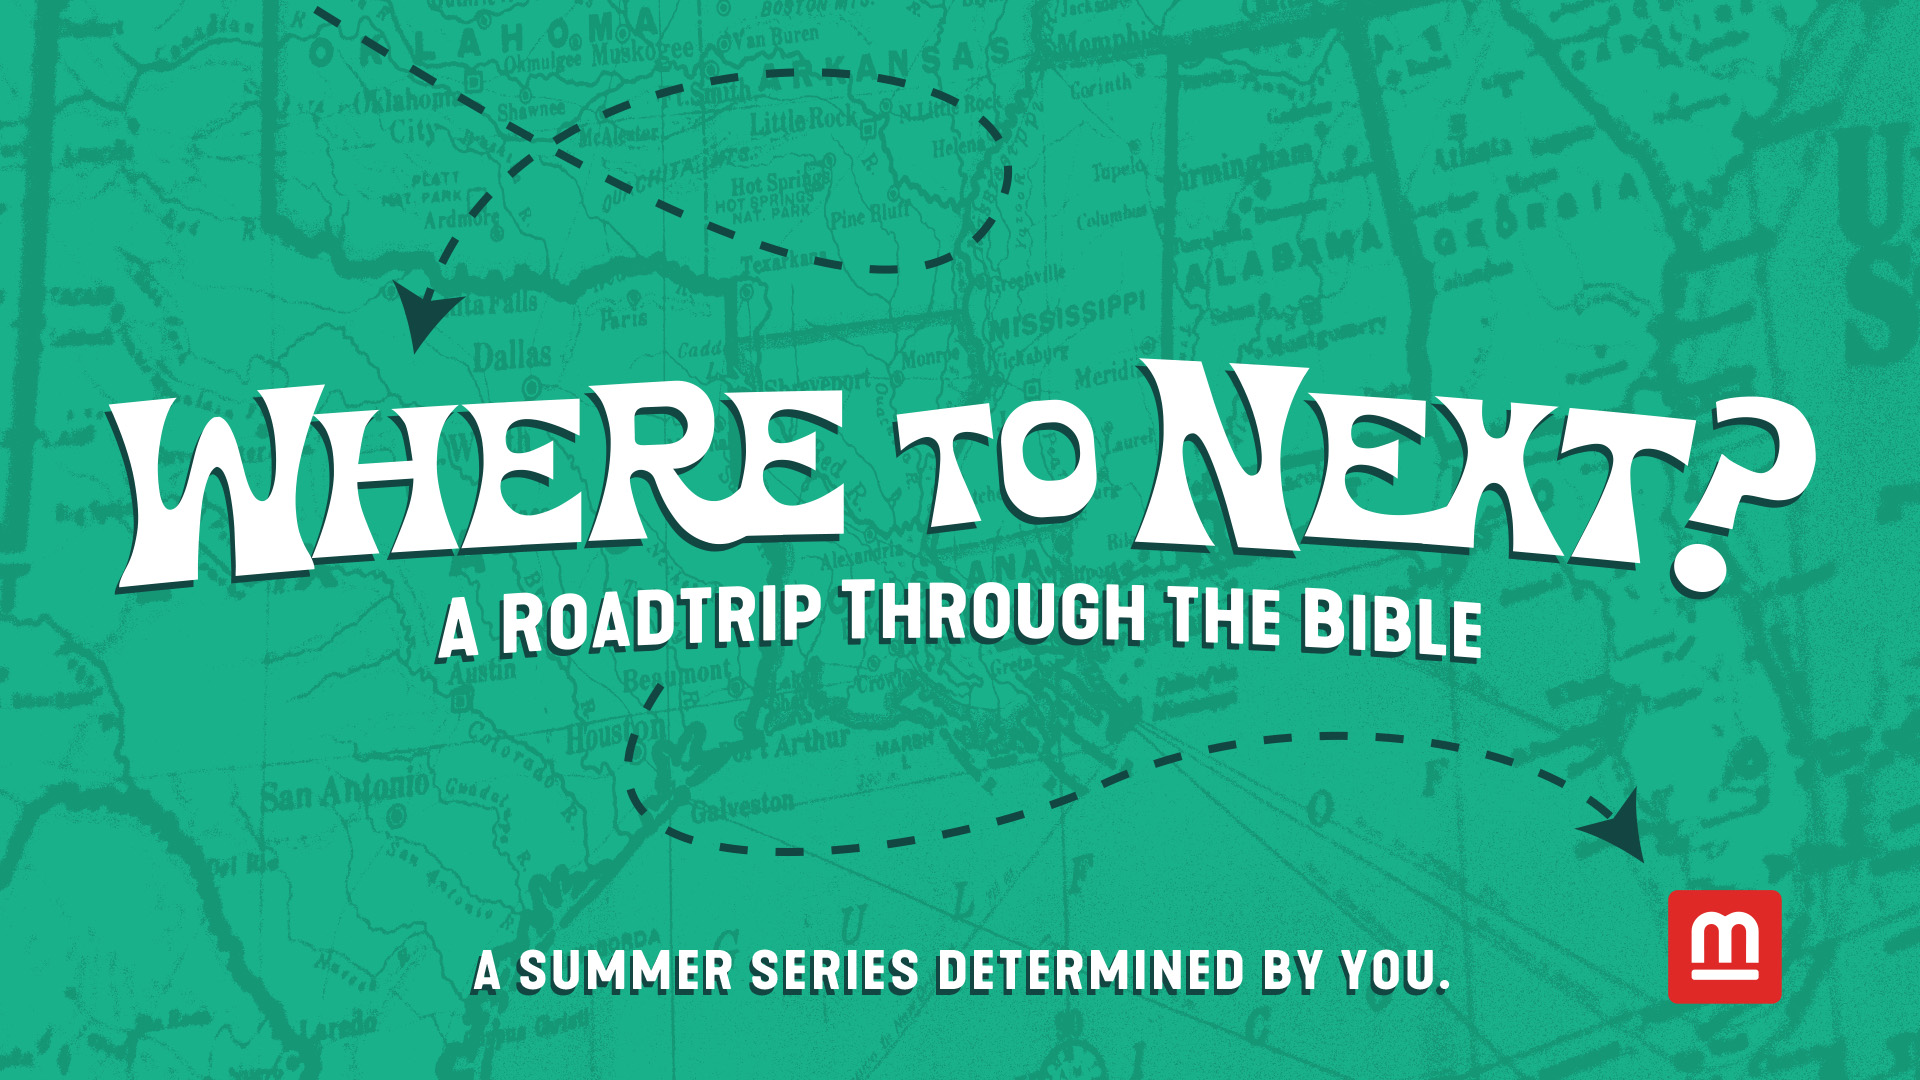 Where to Next? Summer roadtrip through the Bible.